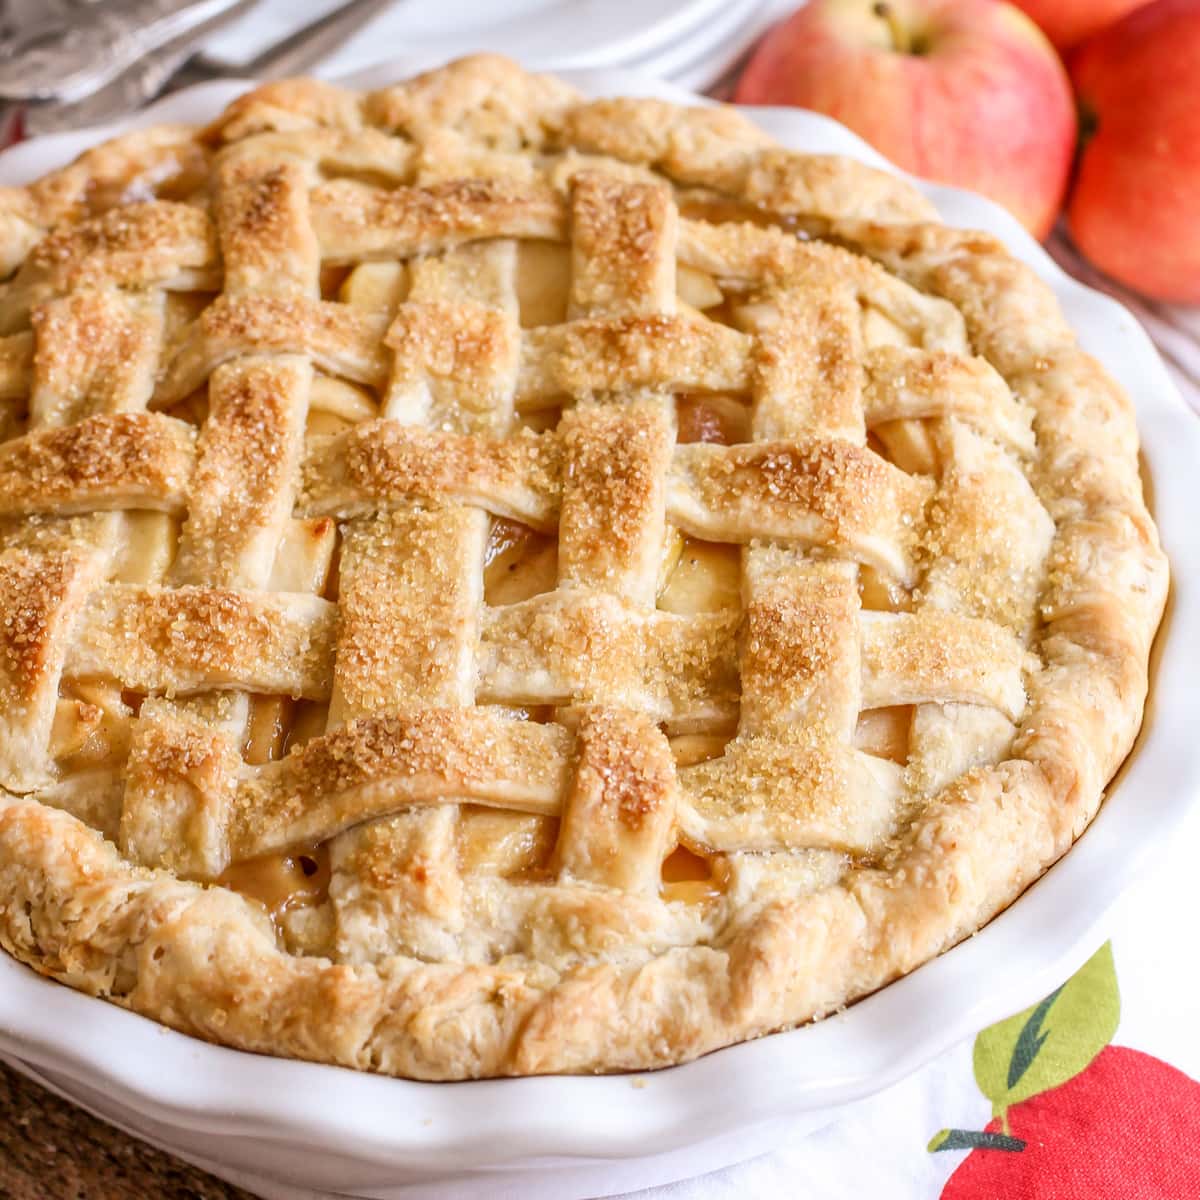 Thanksgiving dinner ideas - an entire best apple pie in a baking dish.